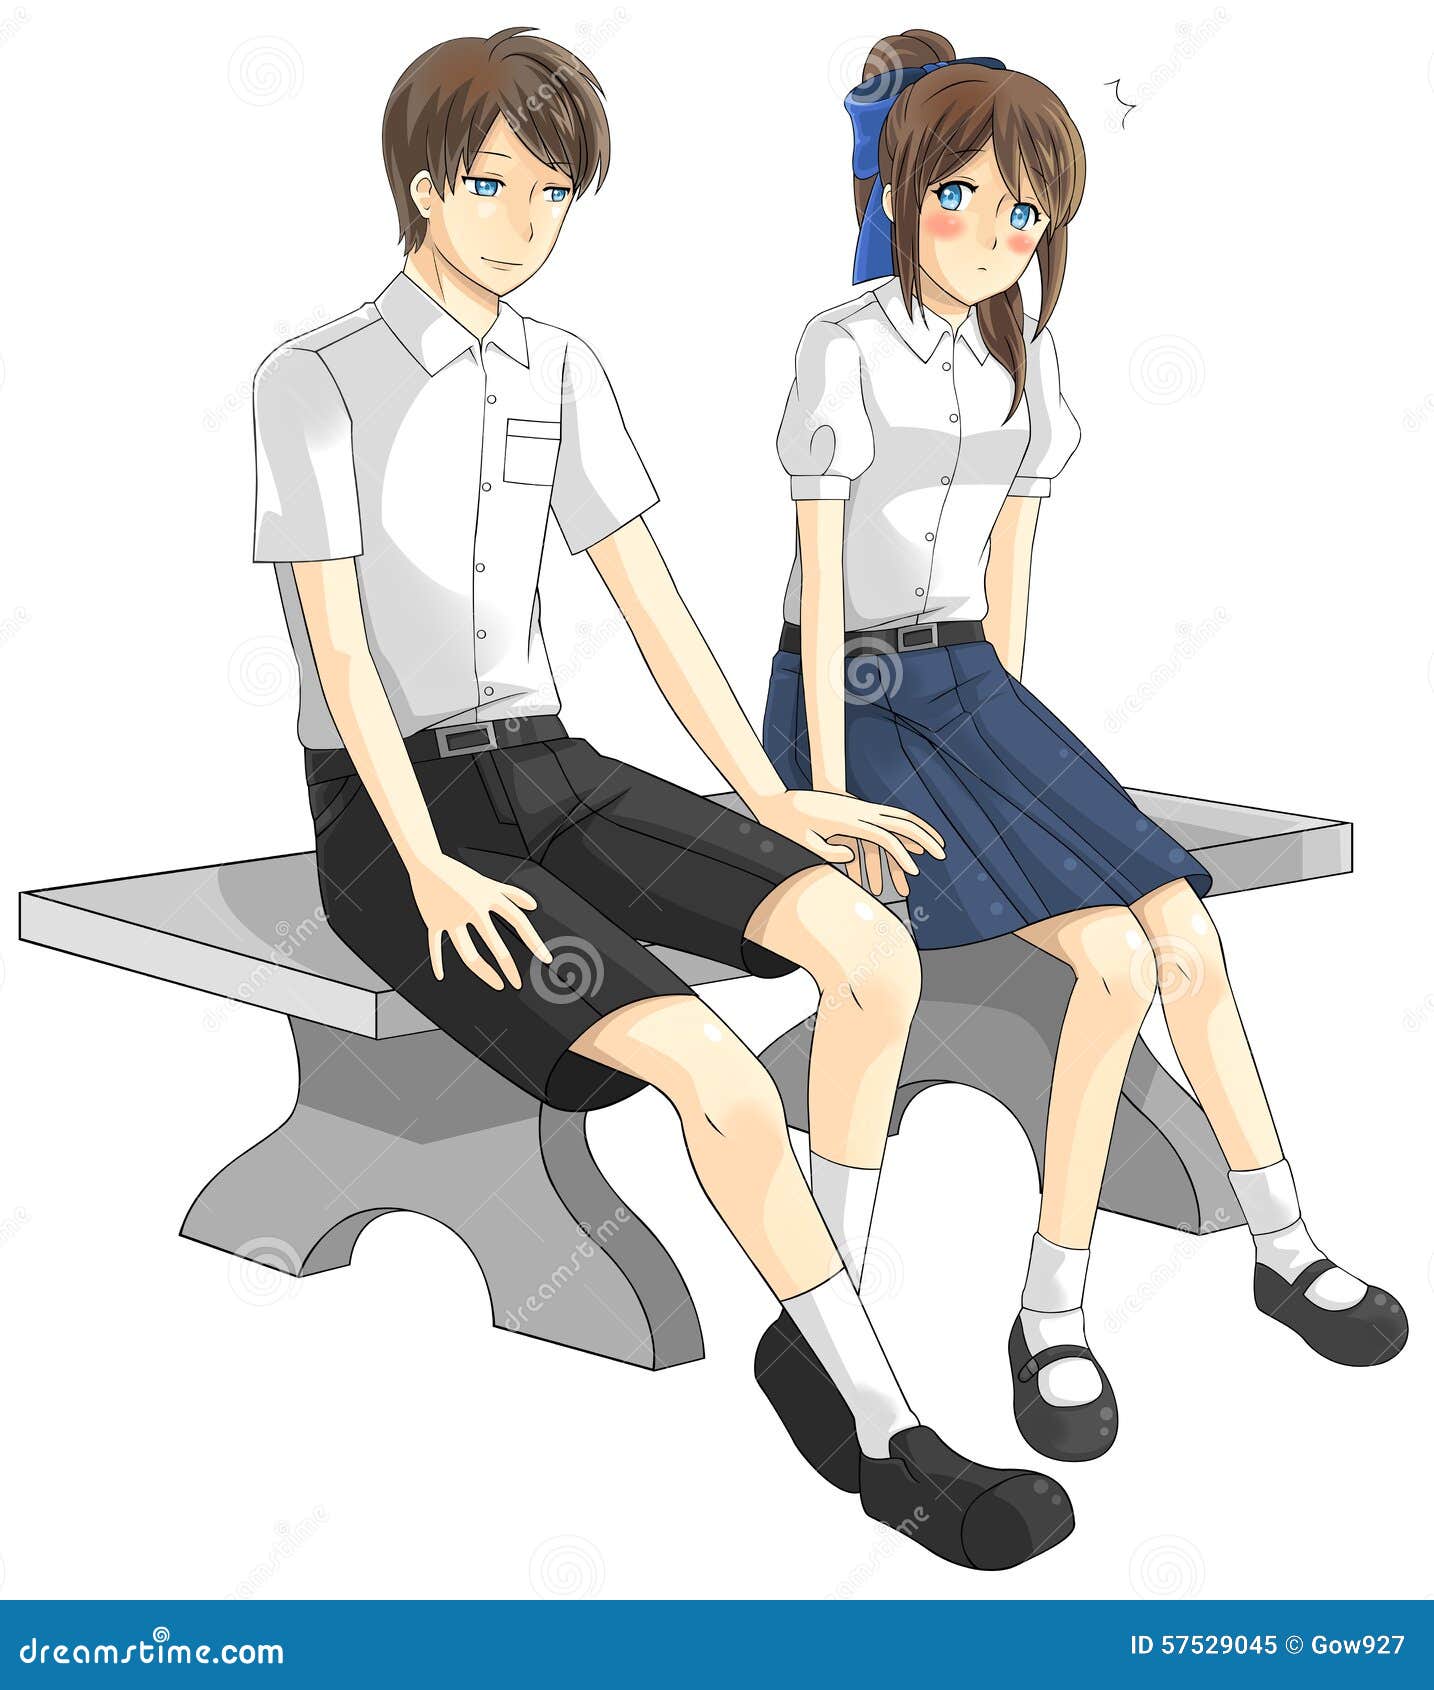 Top 10 School Romance Anime [Best Recommendations]